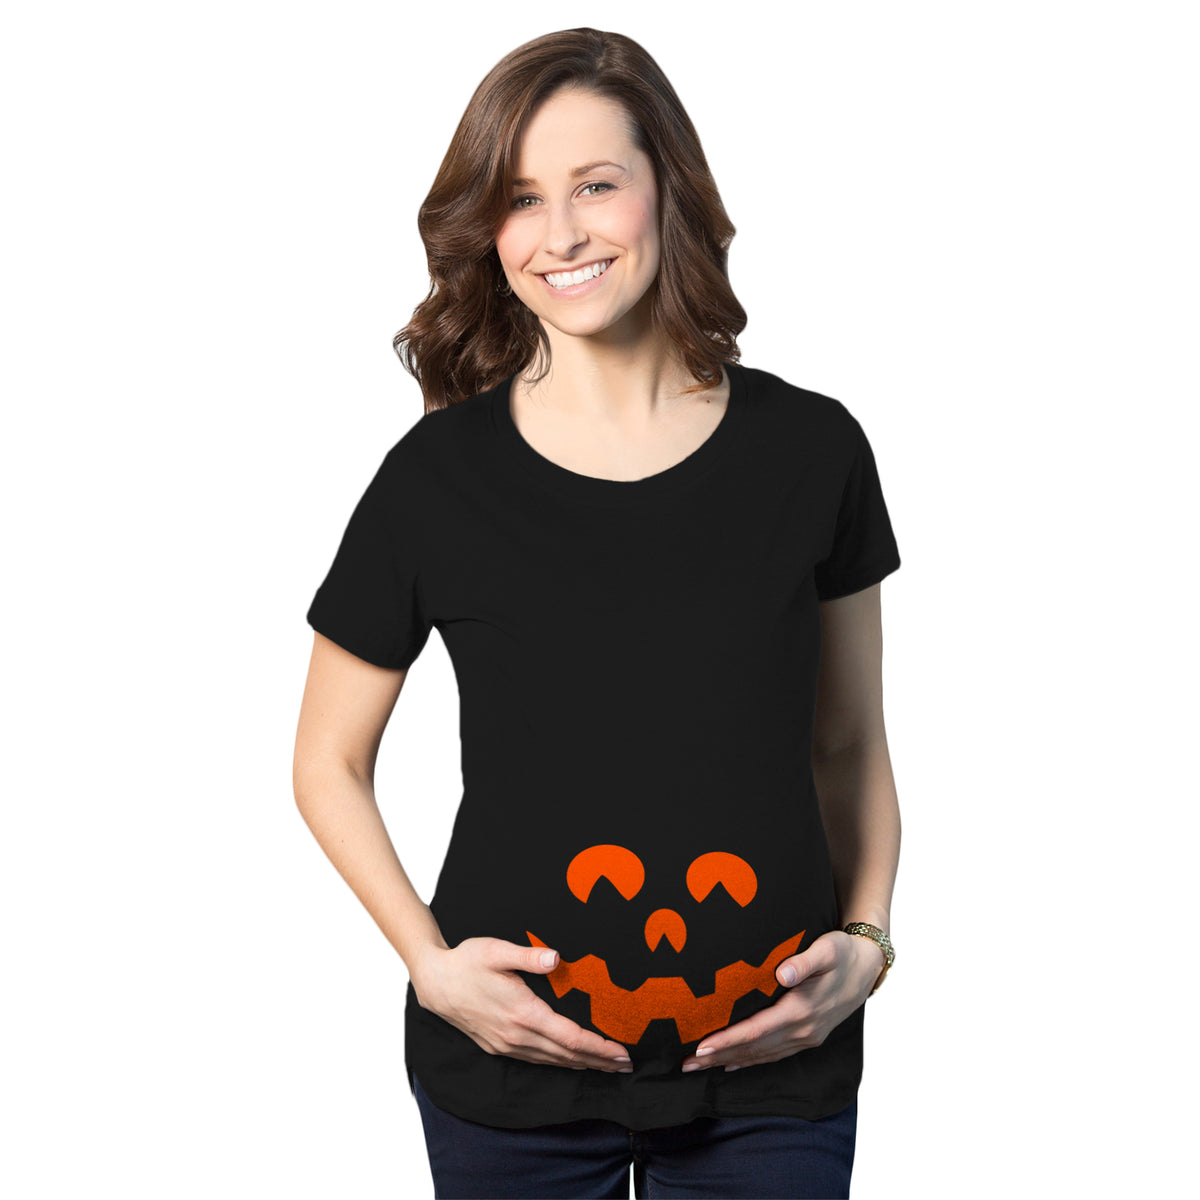 Funny Black Cartoon Eyes Pumpkin Face Maternity T Shirt Nerdy Halloween Tee